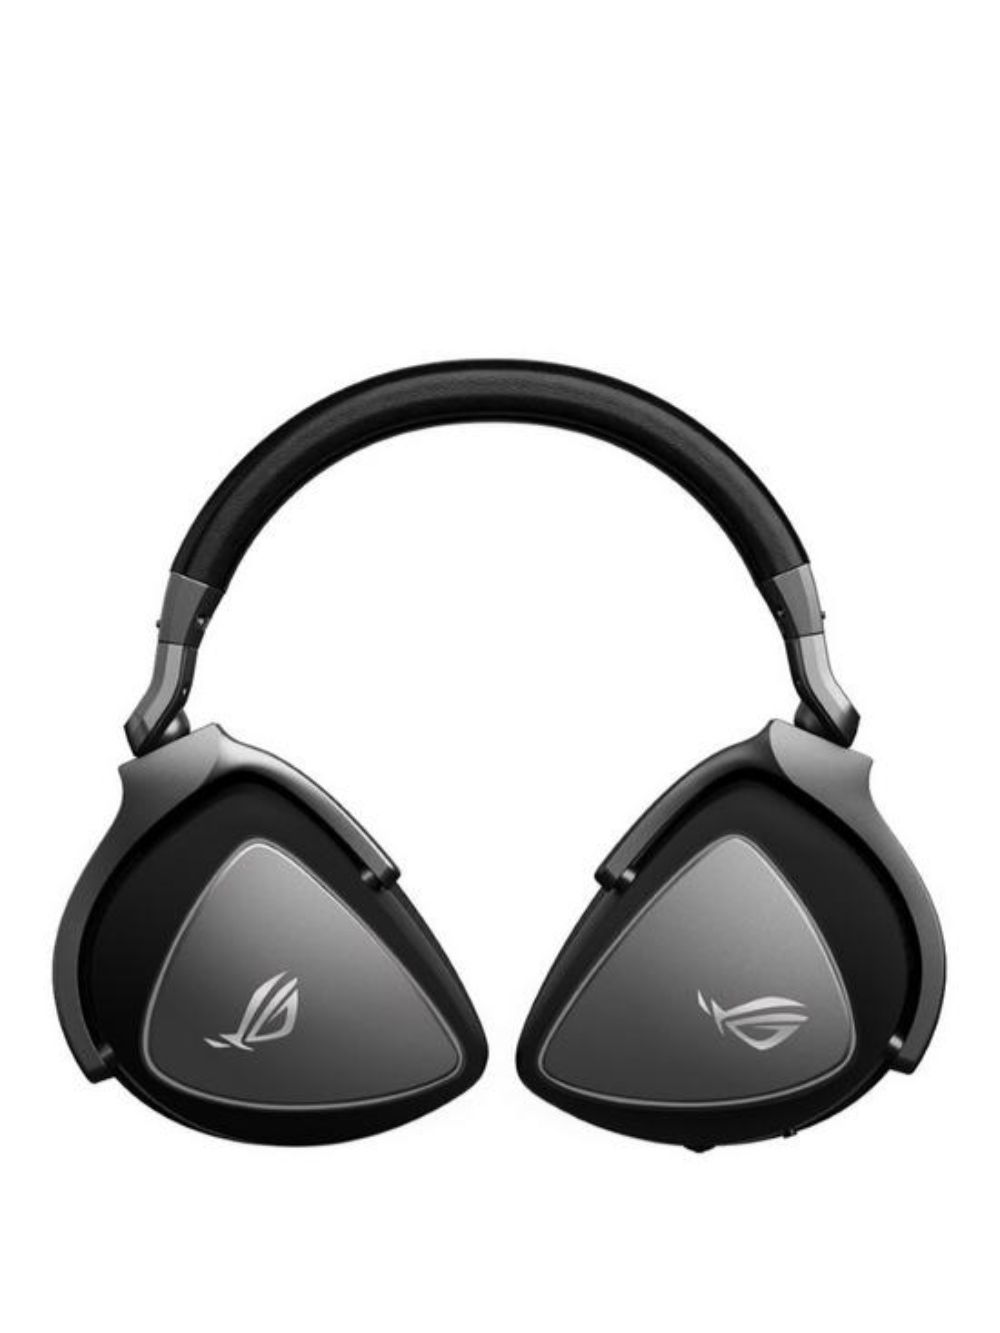 ASUS ROG Delta Core Gaming Headset - Black